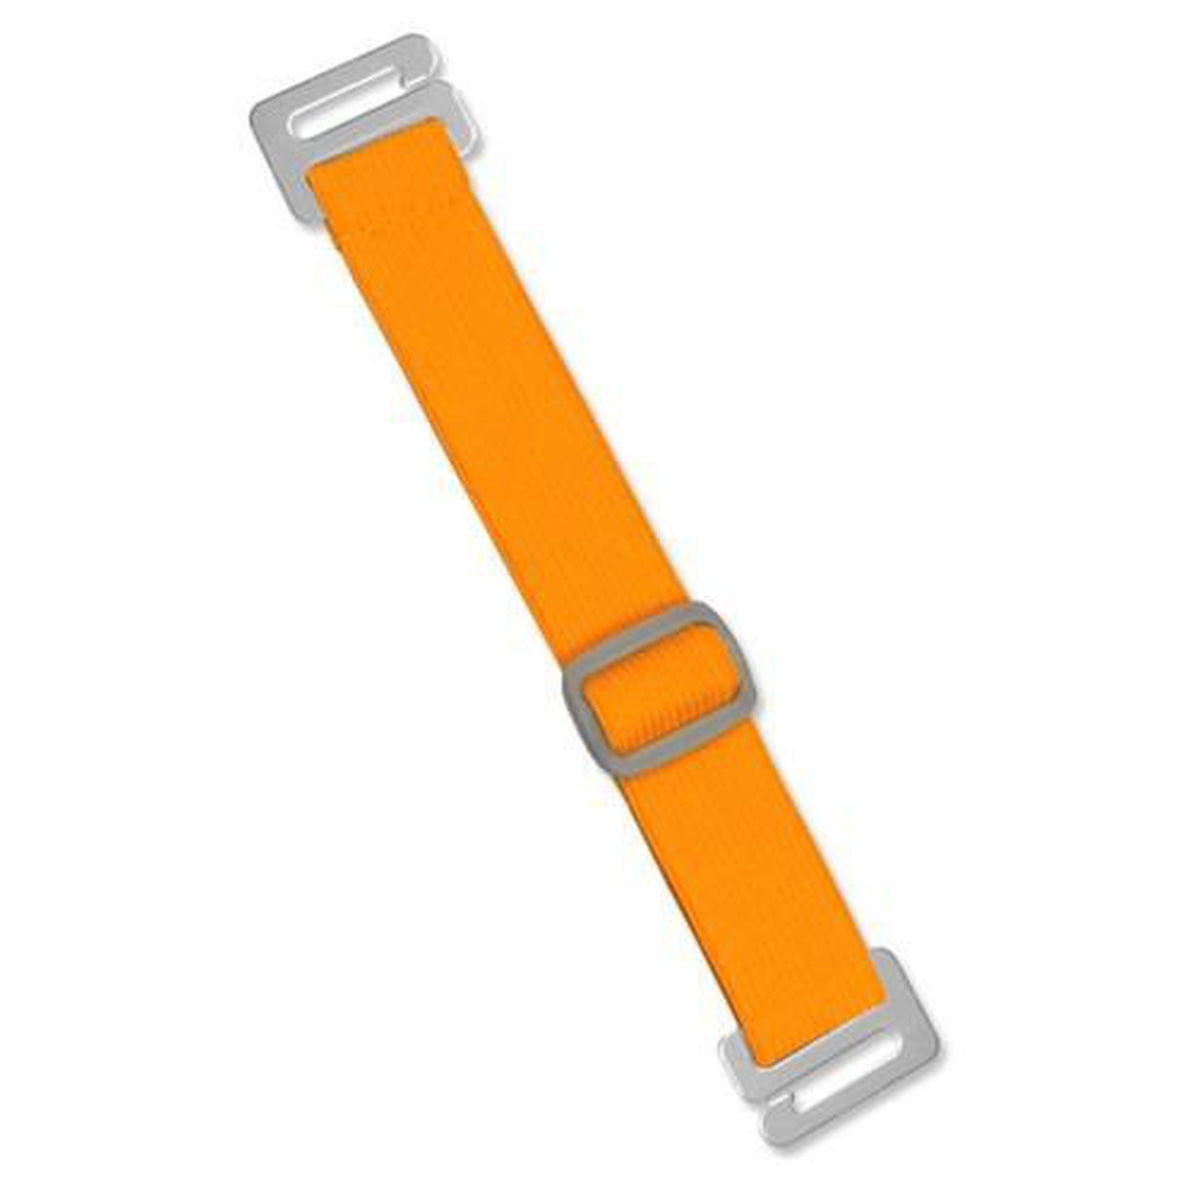 Buy Black Adjustable Elastic Arm Band Straps - 100pk (1840-7201)